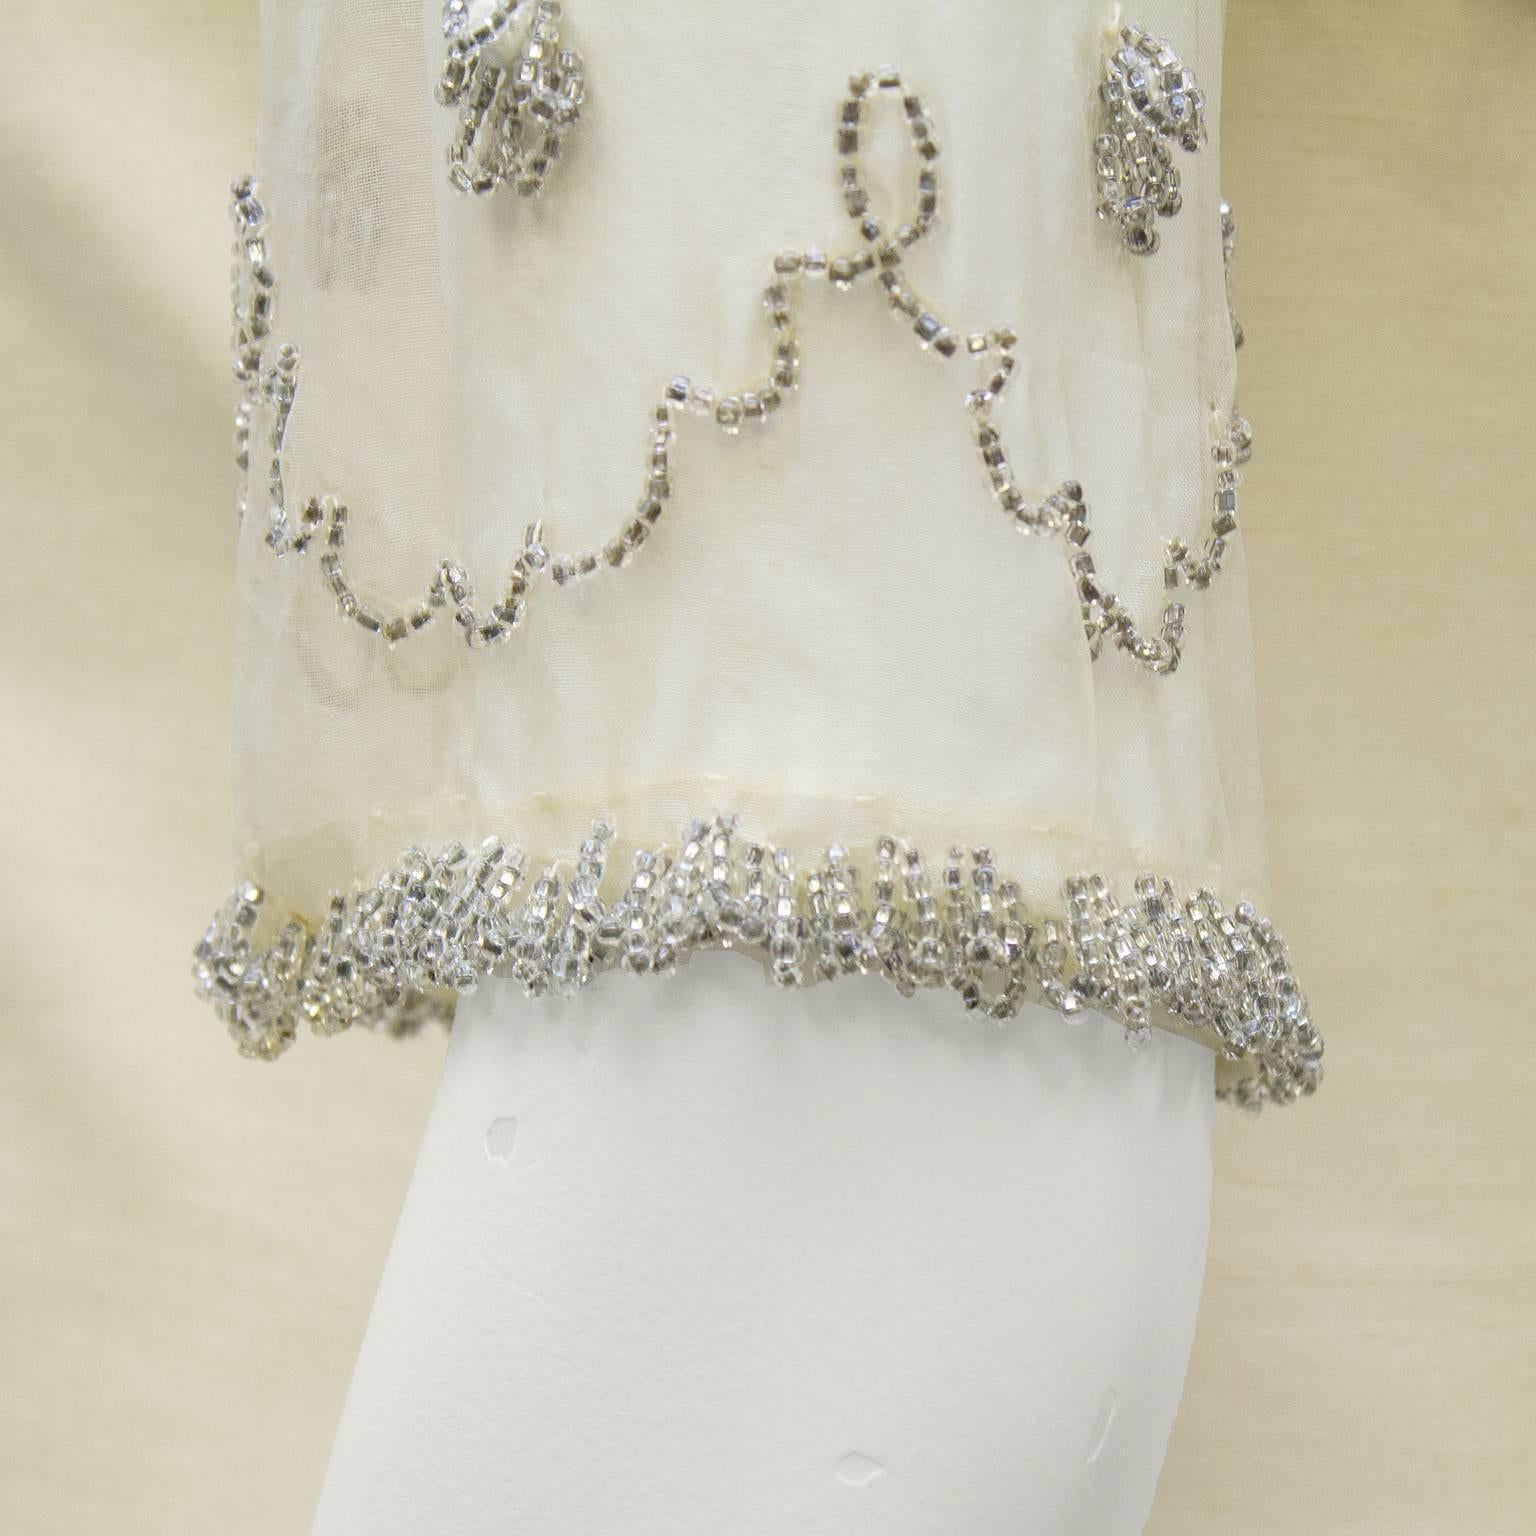 Gray 1960's Cream Mini Dress with Sheer Beaded Panel